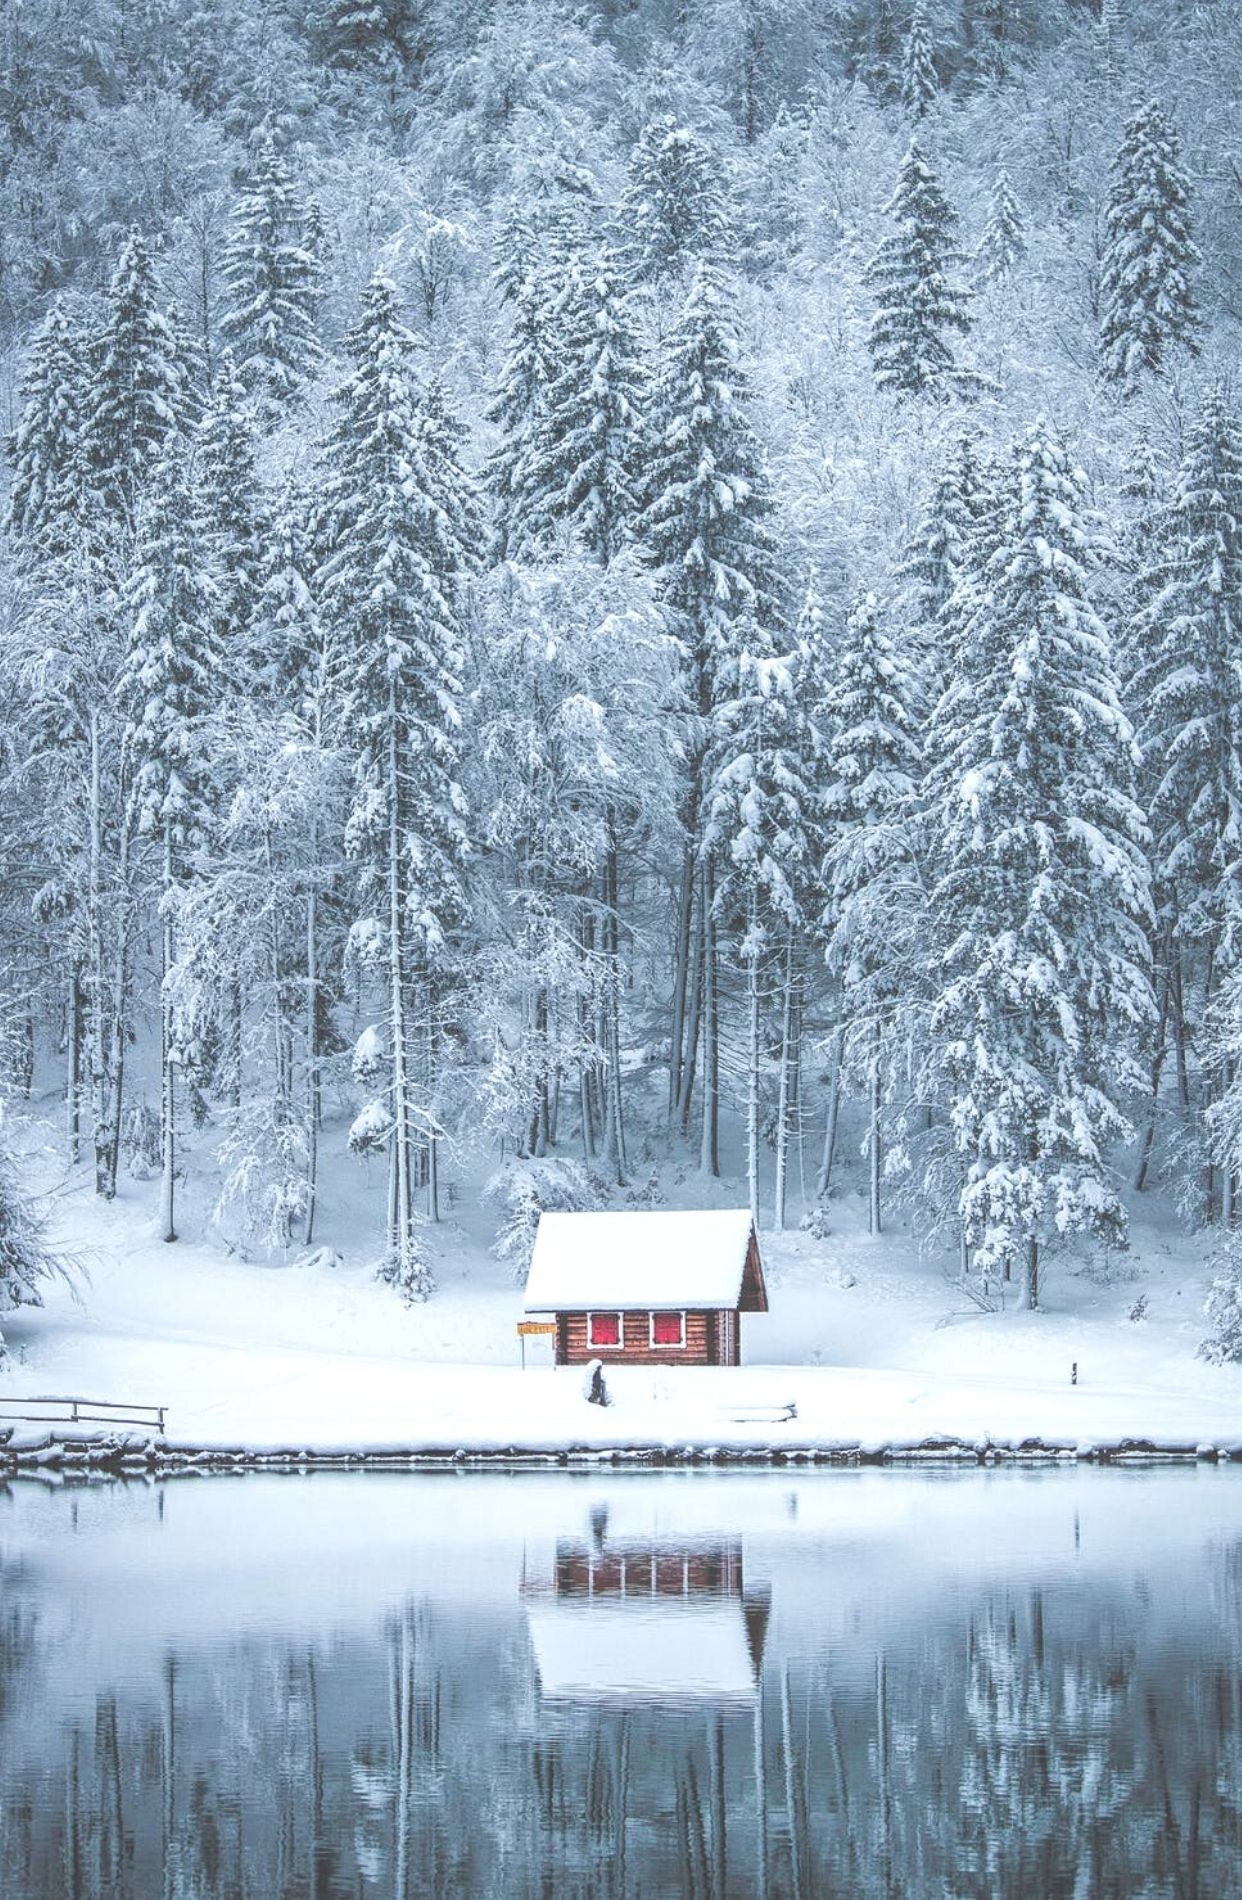 Free Beautiful Winter Wallpaper For iPhone That You'll Love. Winter wallpaper, Winter picture, iPhone wallpaper winter